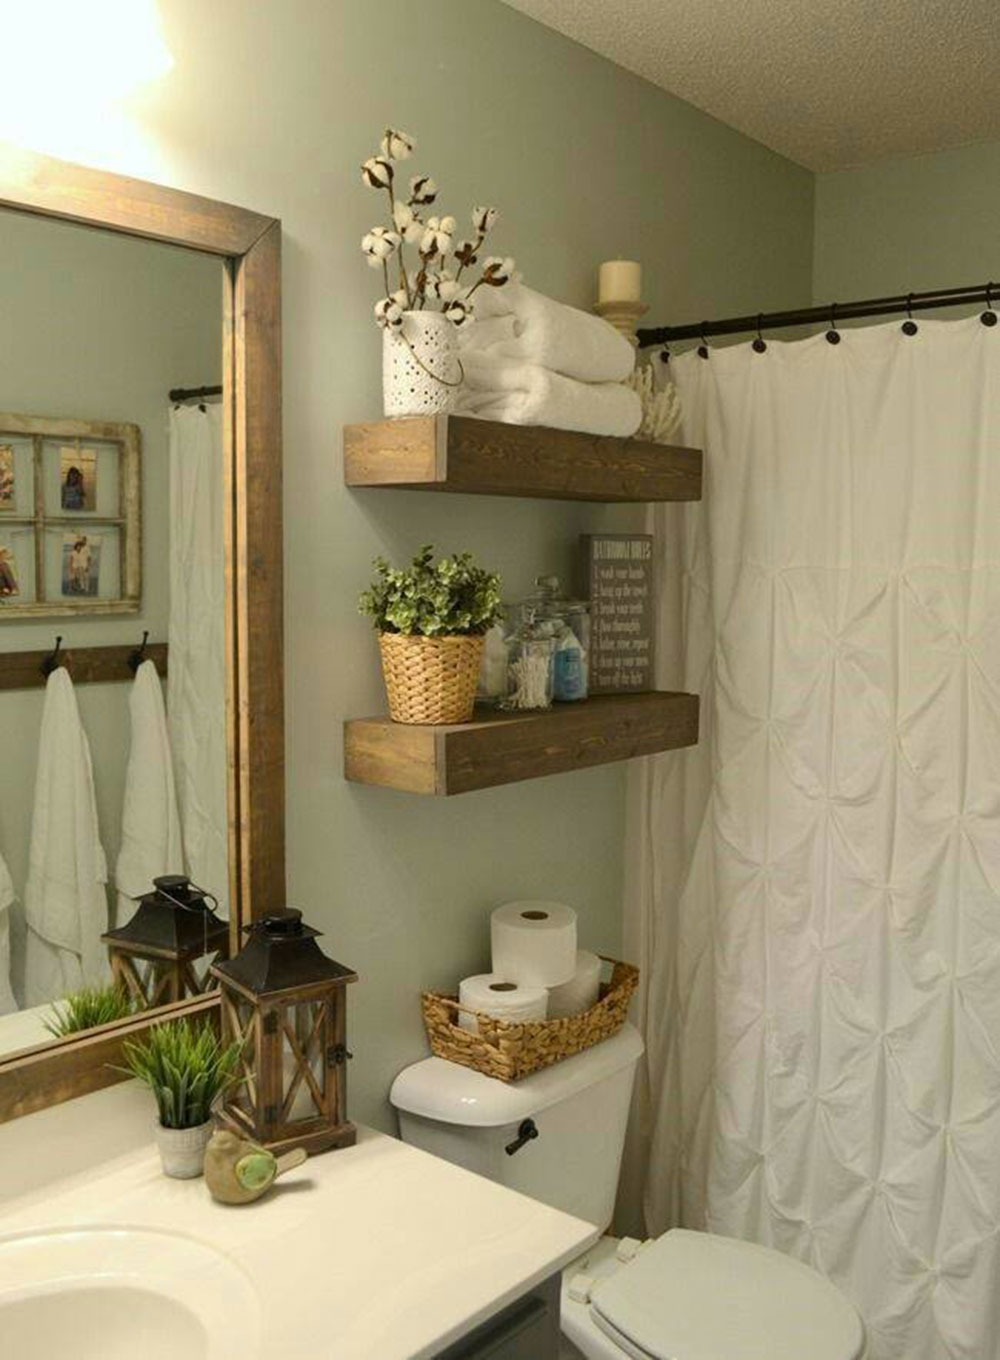 40+ Bathroom Shelves Ideas Pictures - brasileirosemcalgary